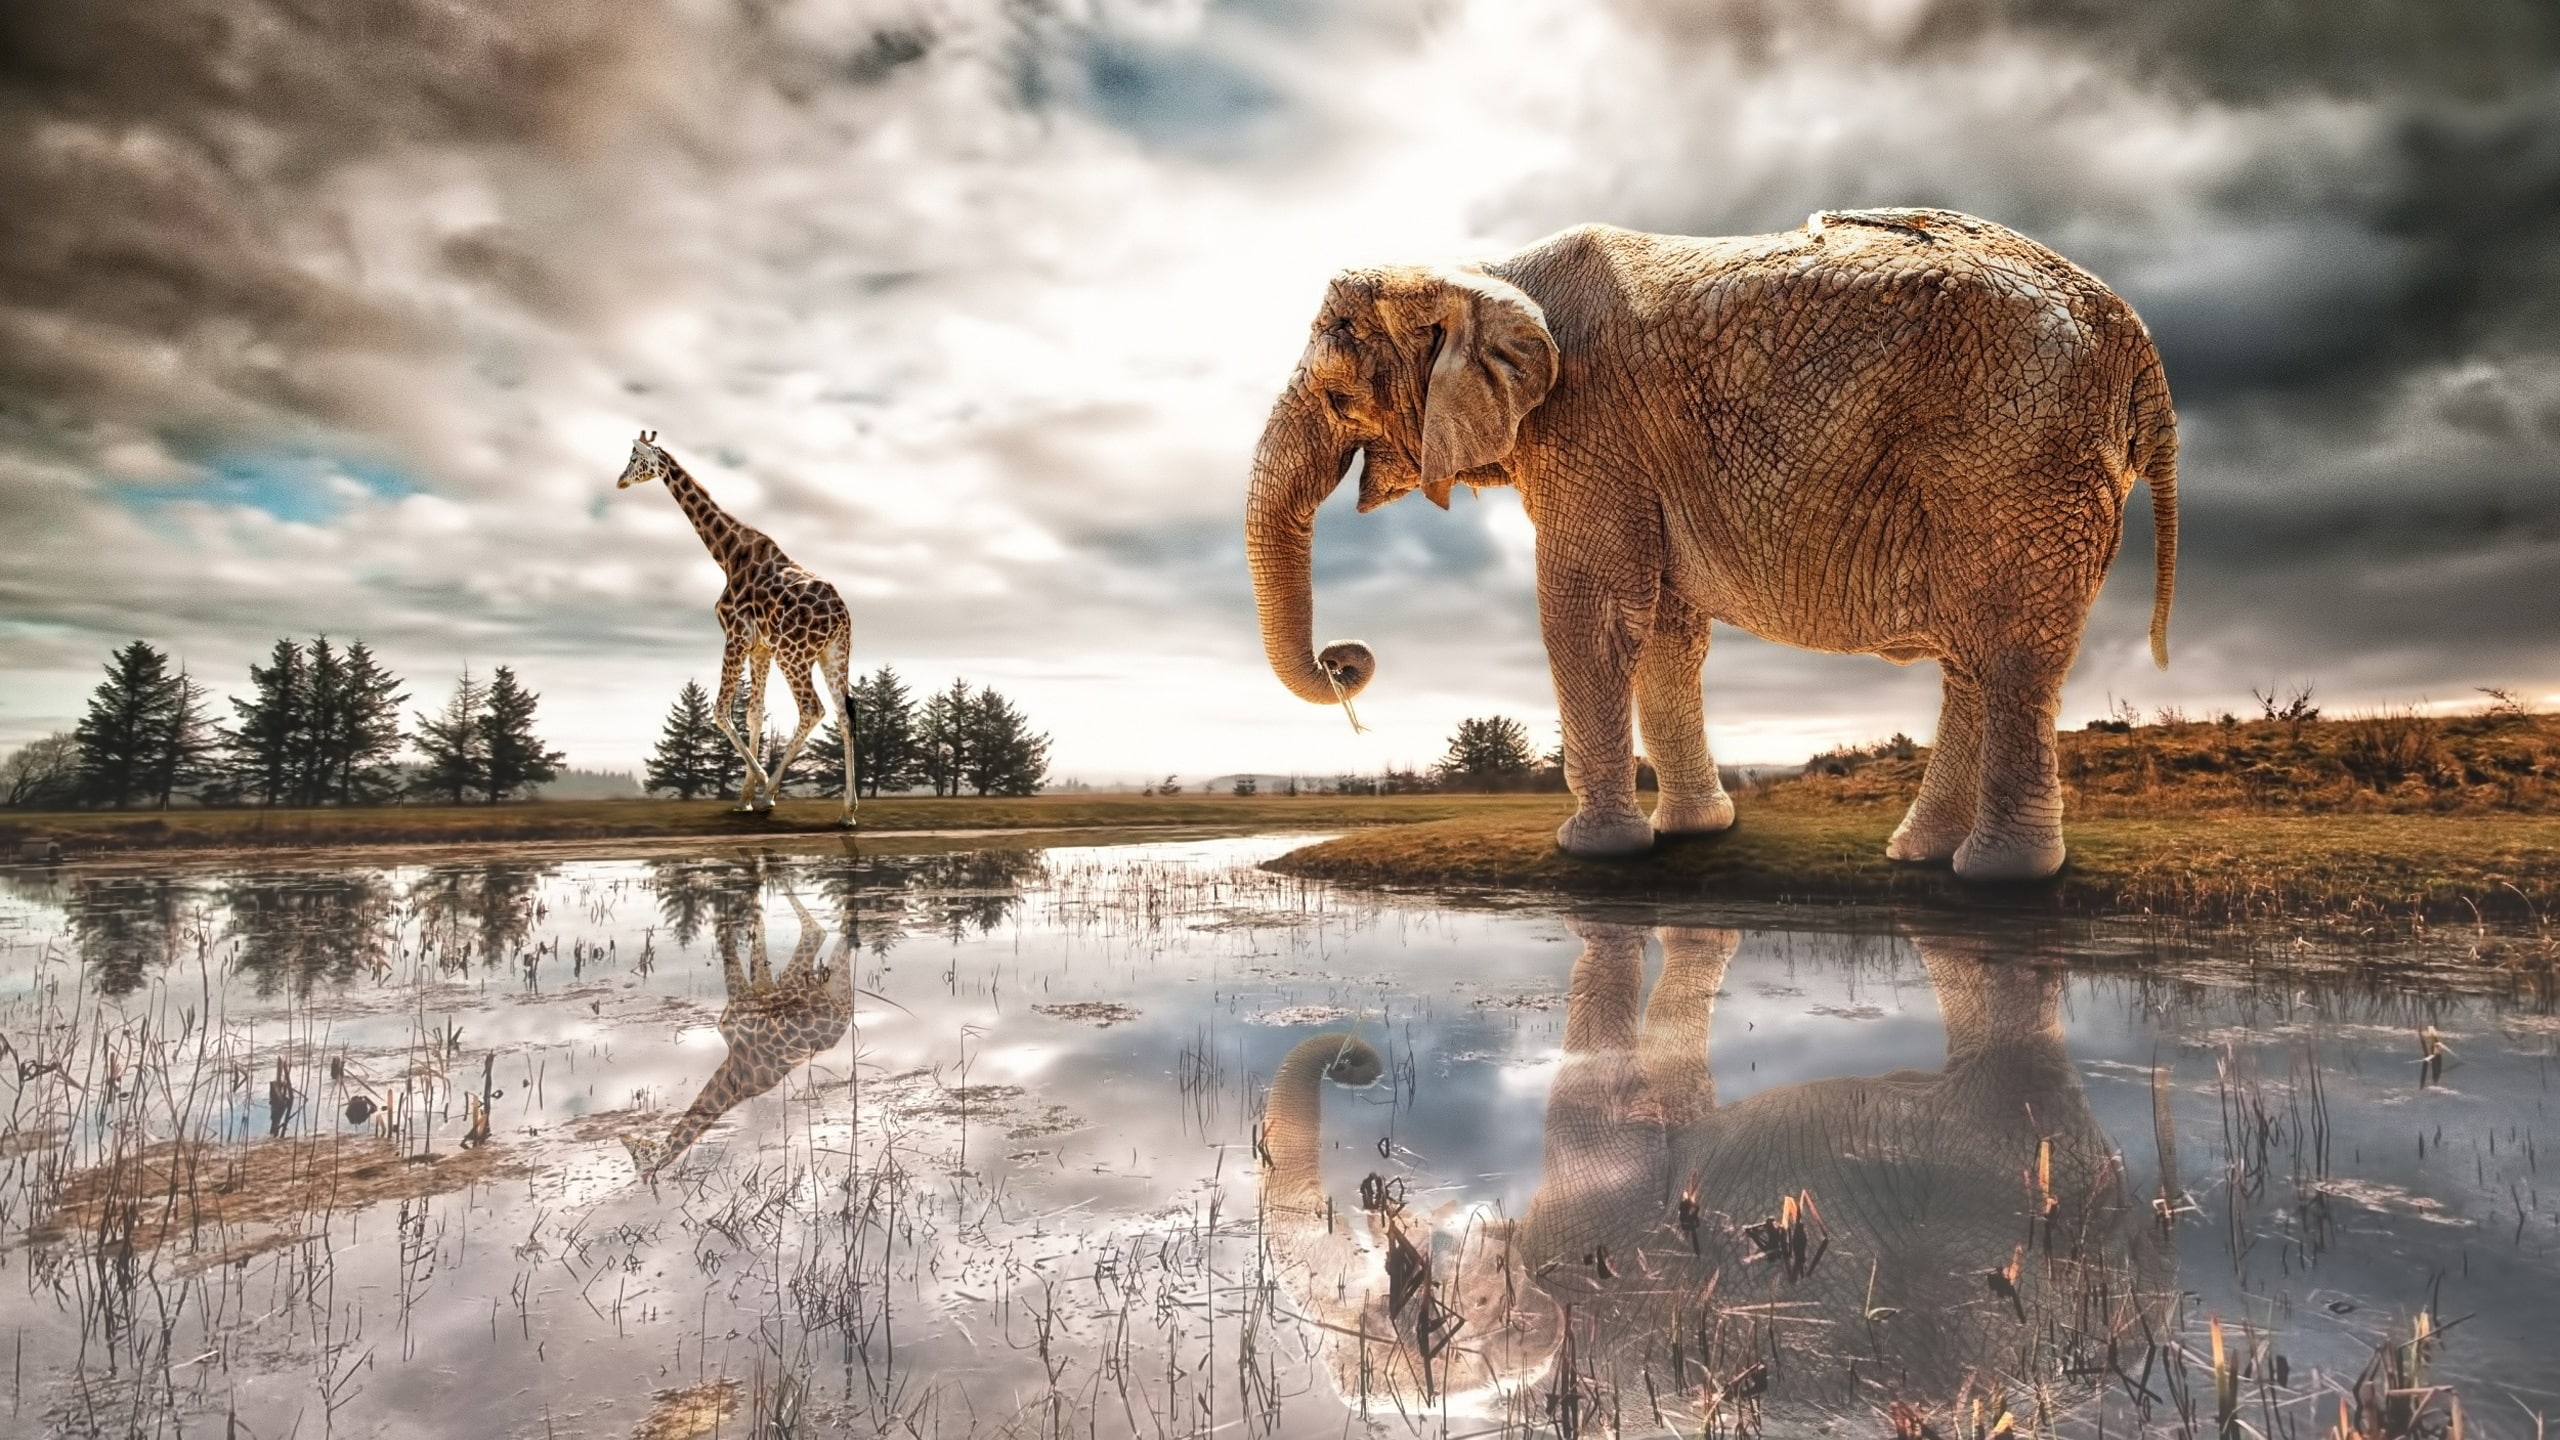 Lake, water reflection, elephant, giraffe, river